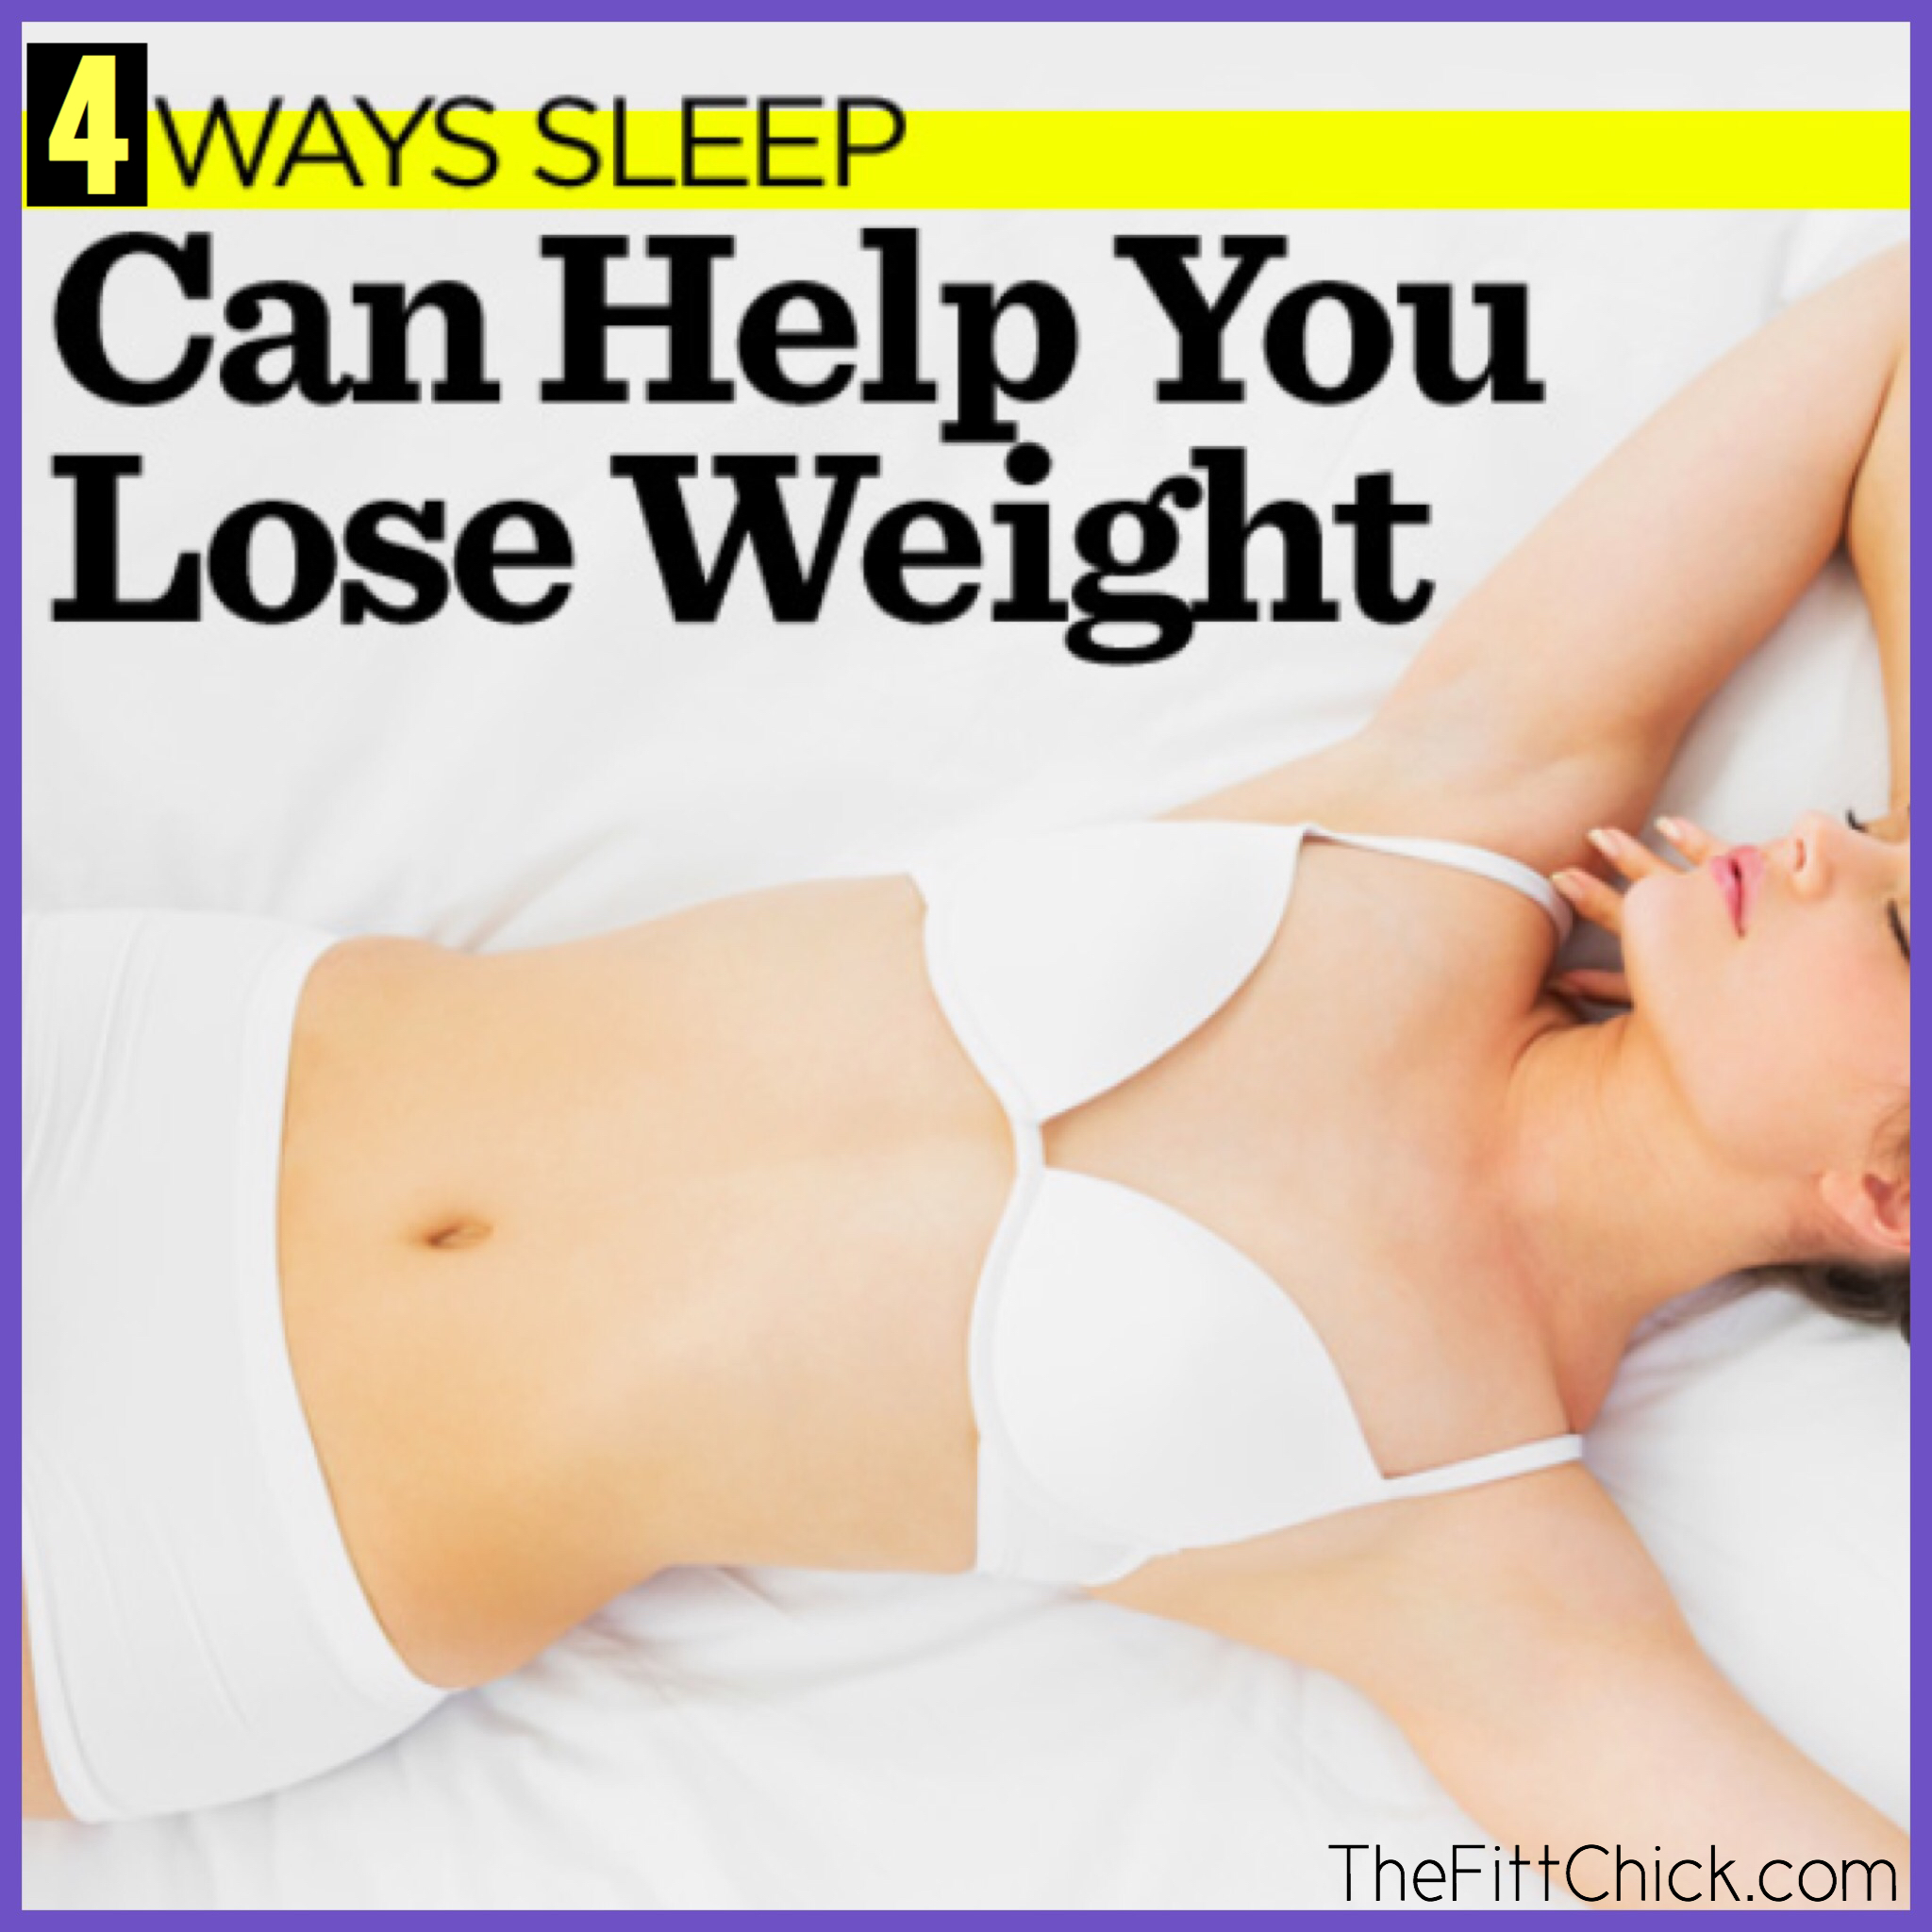 do you burn calories while sleeping